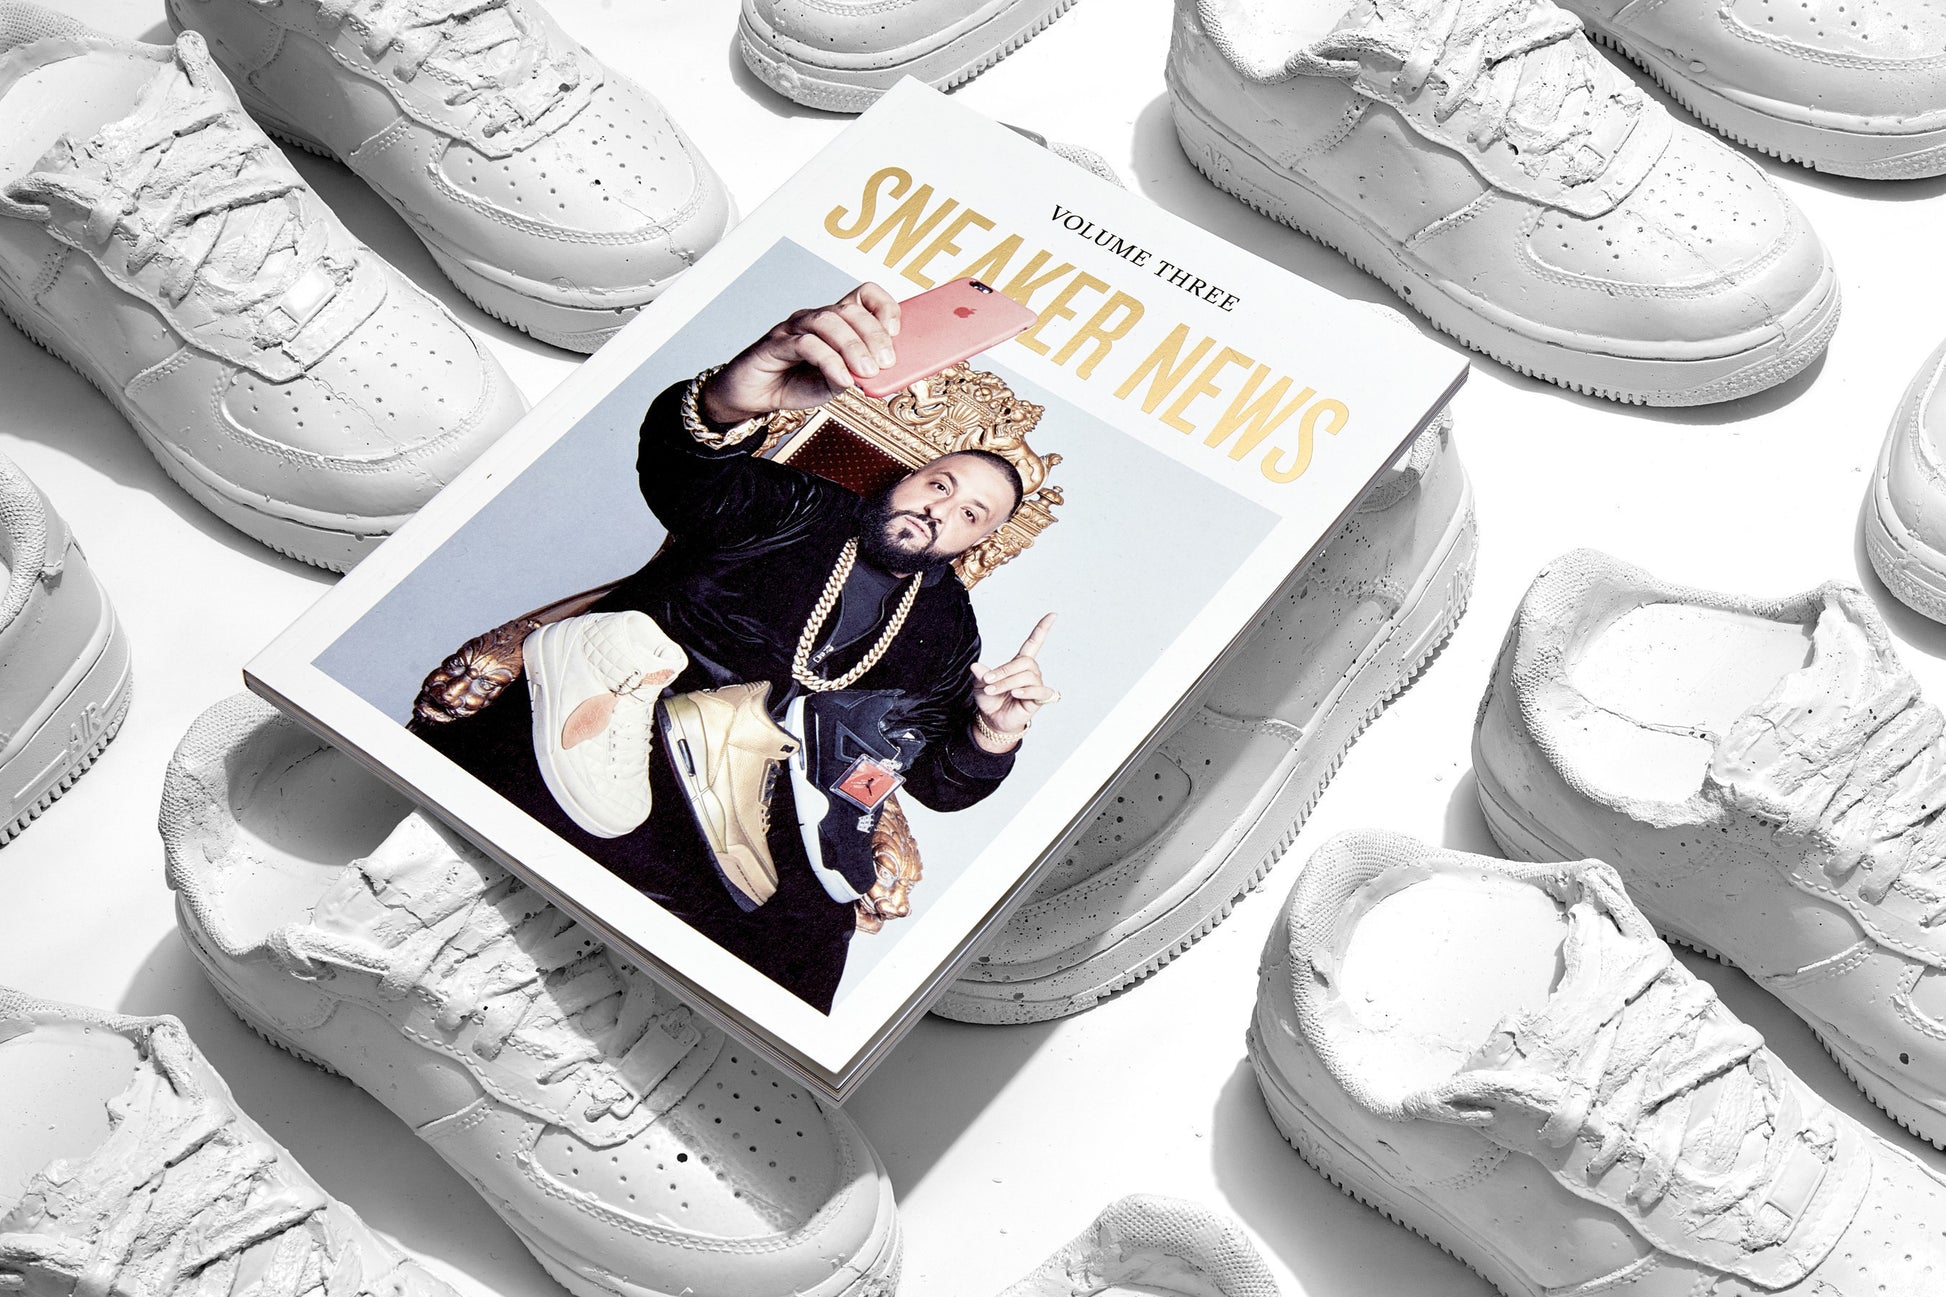 Sneaker News Vol 3 Magazine - DJ Khaled Issue (white / multi)